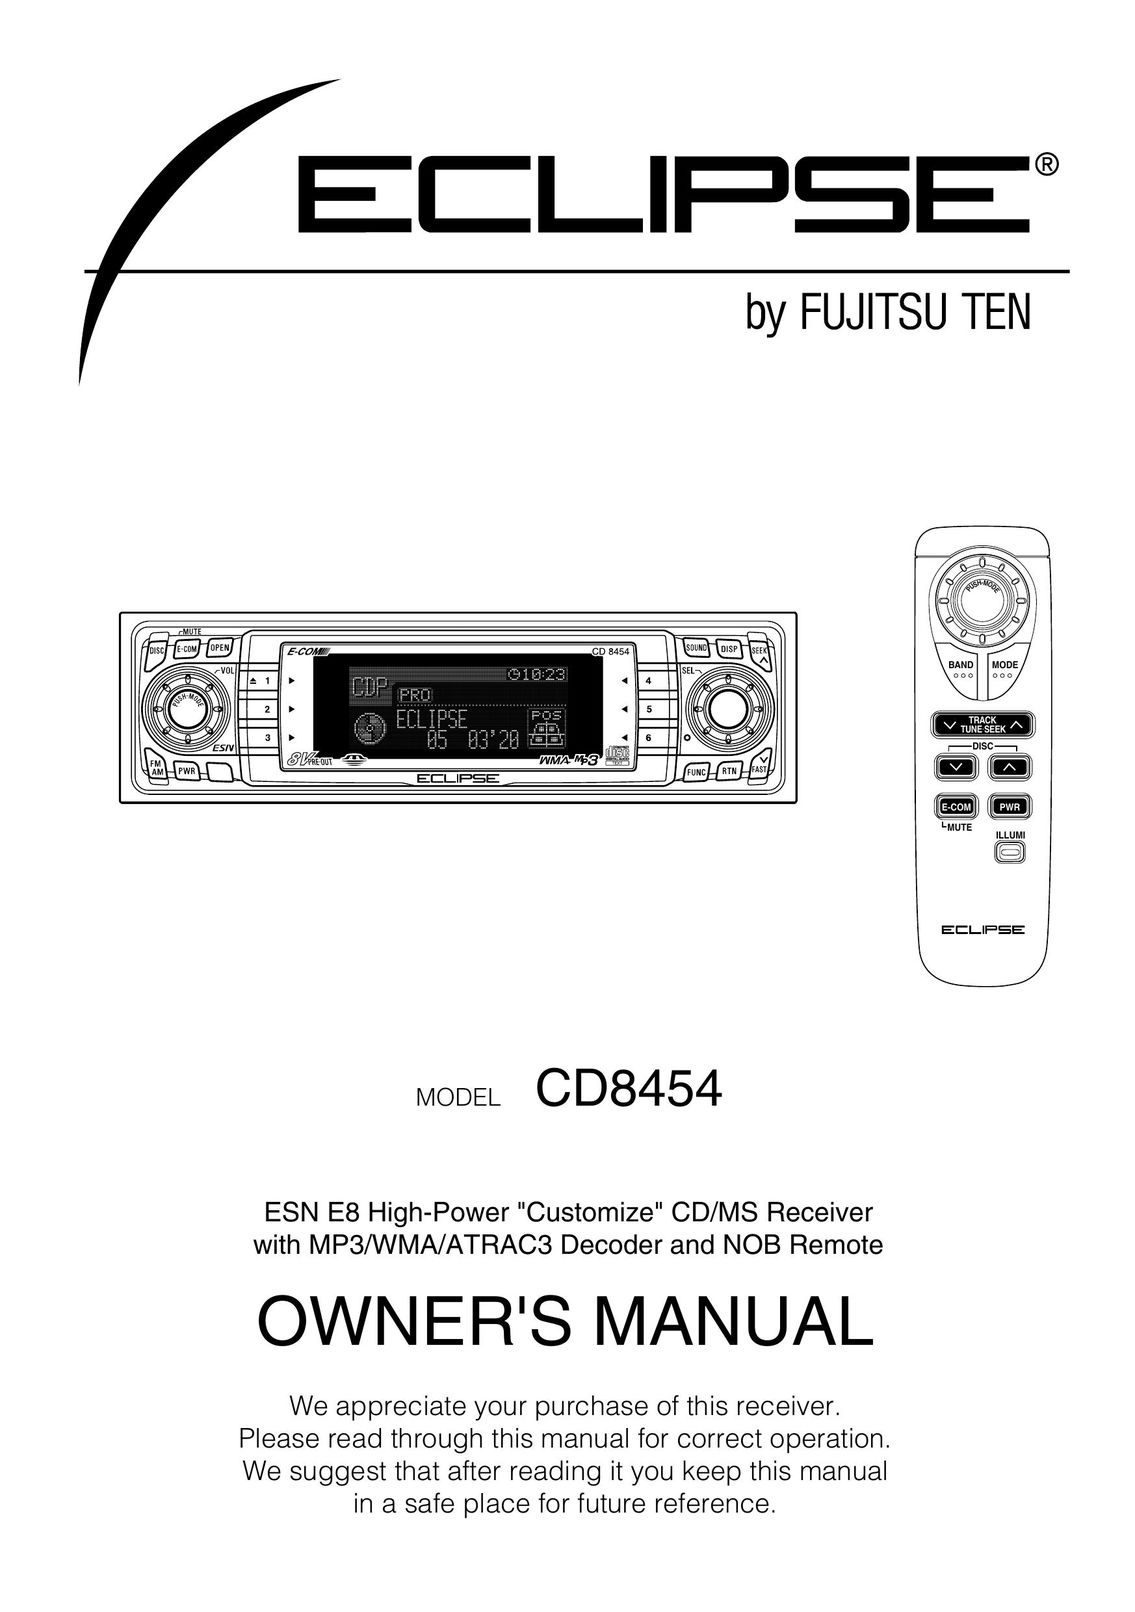 Eclipse - Fujitsu Ten CD8454 Car Stereo System User Manual